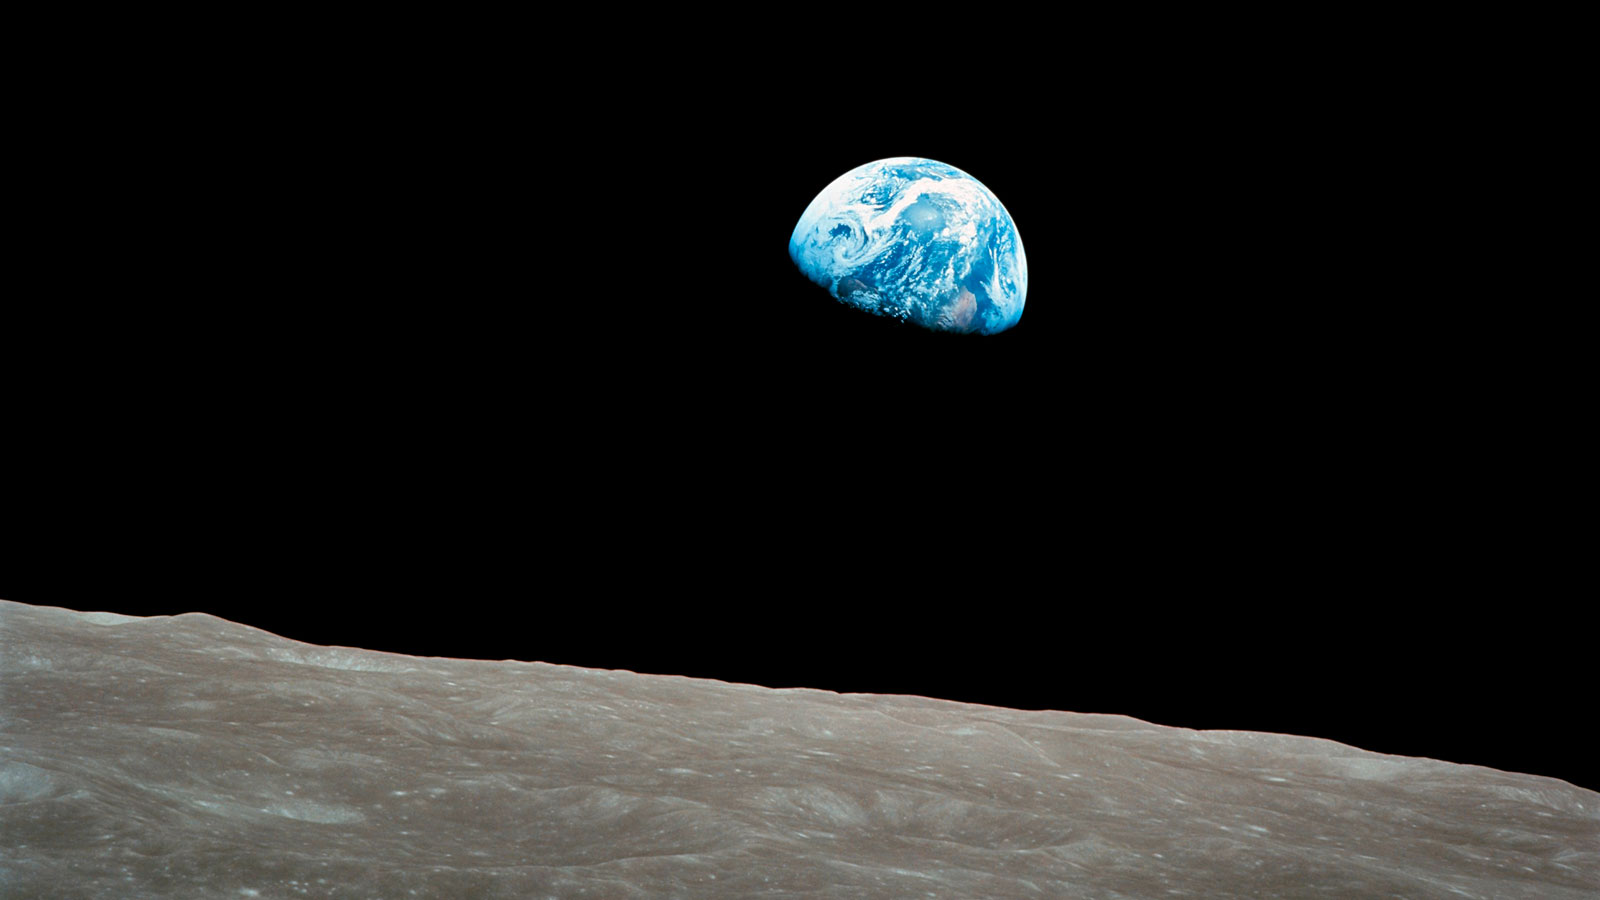 Earthrise - NASA/Bill Anders 1968 - Public Domain